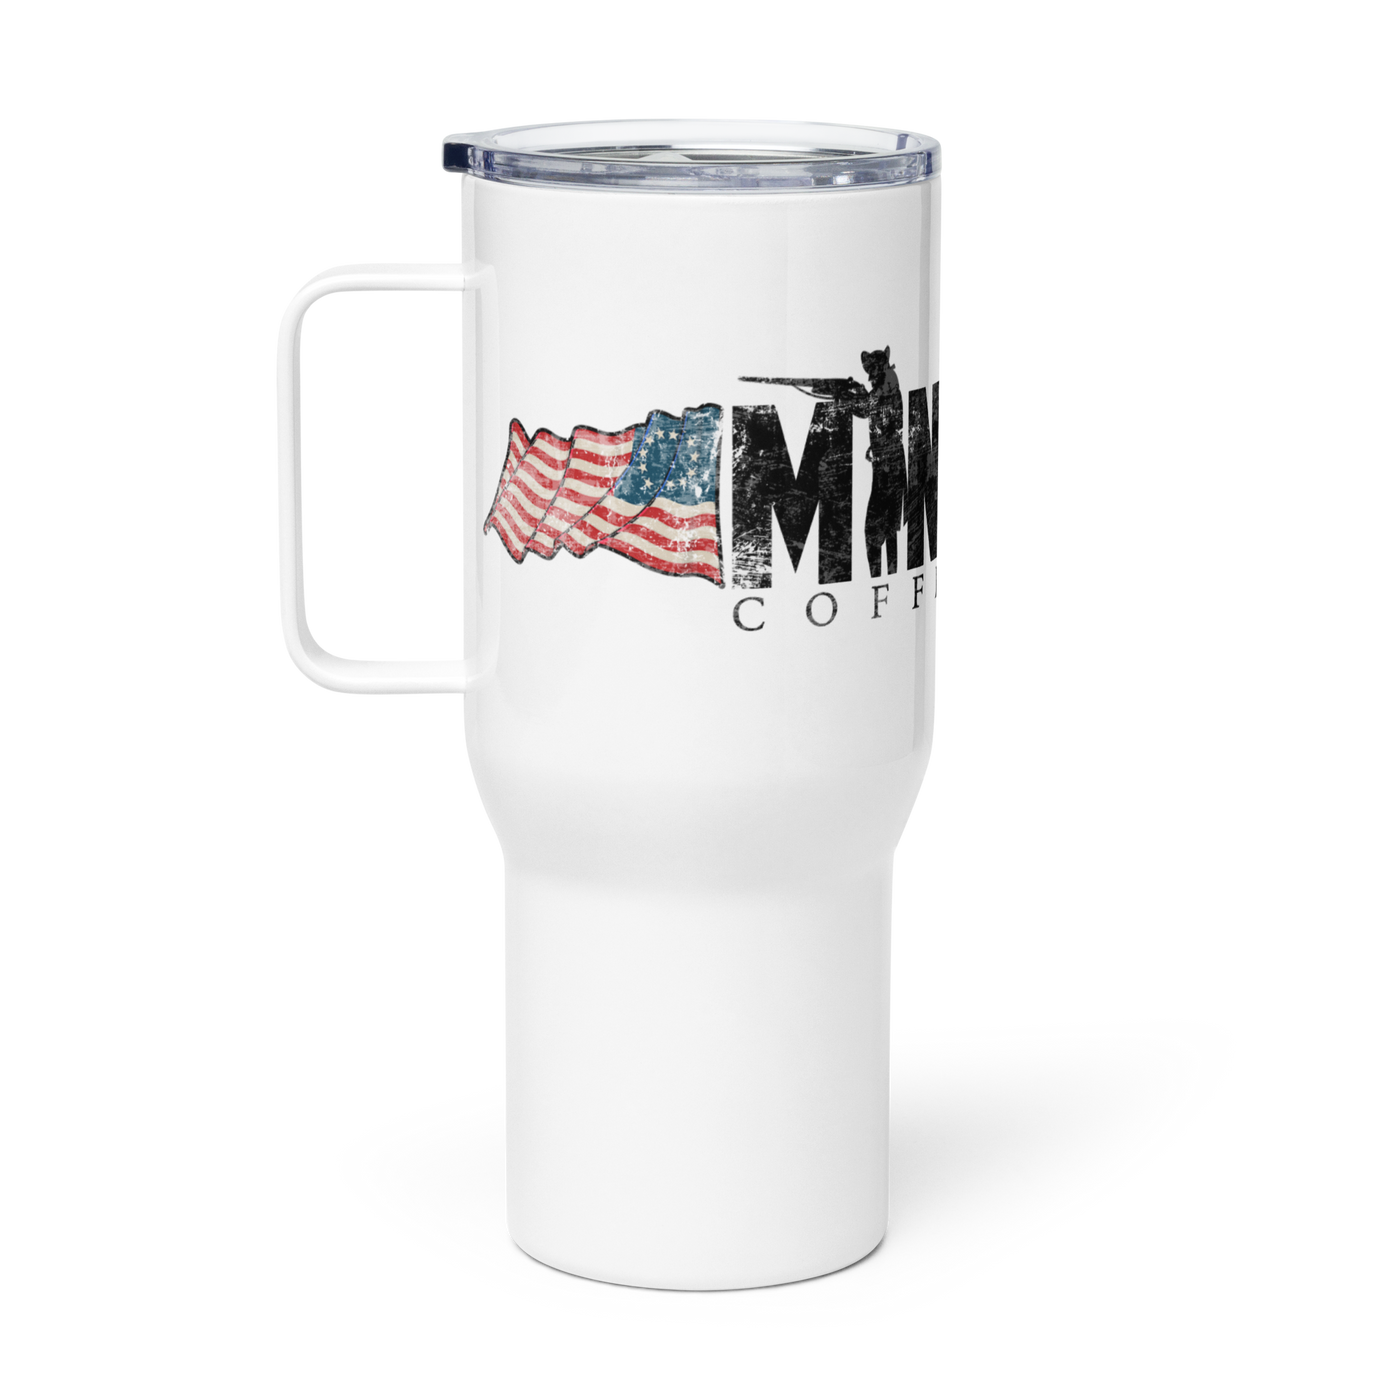 Minutemen Travel mug with a handle